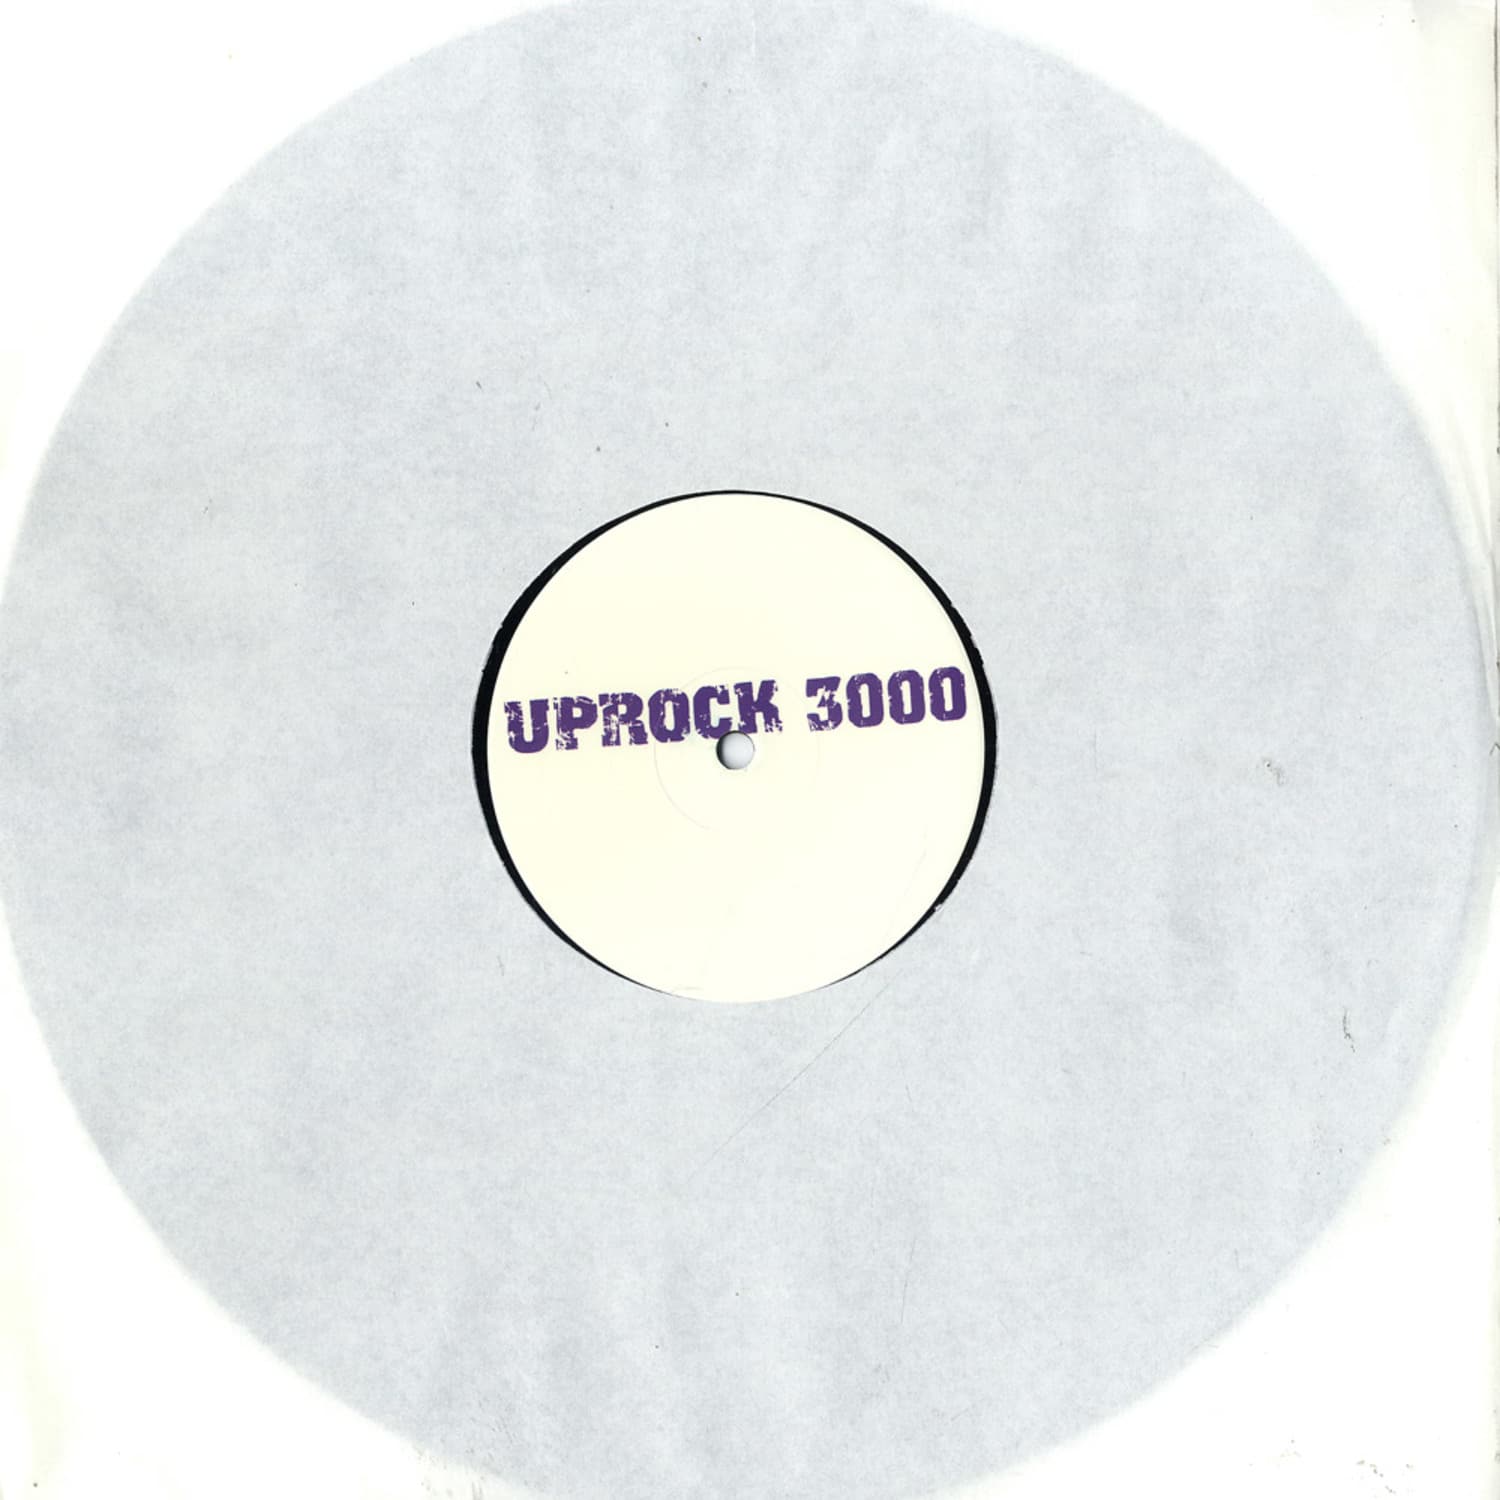 Uprock 3000 - VOL. 1